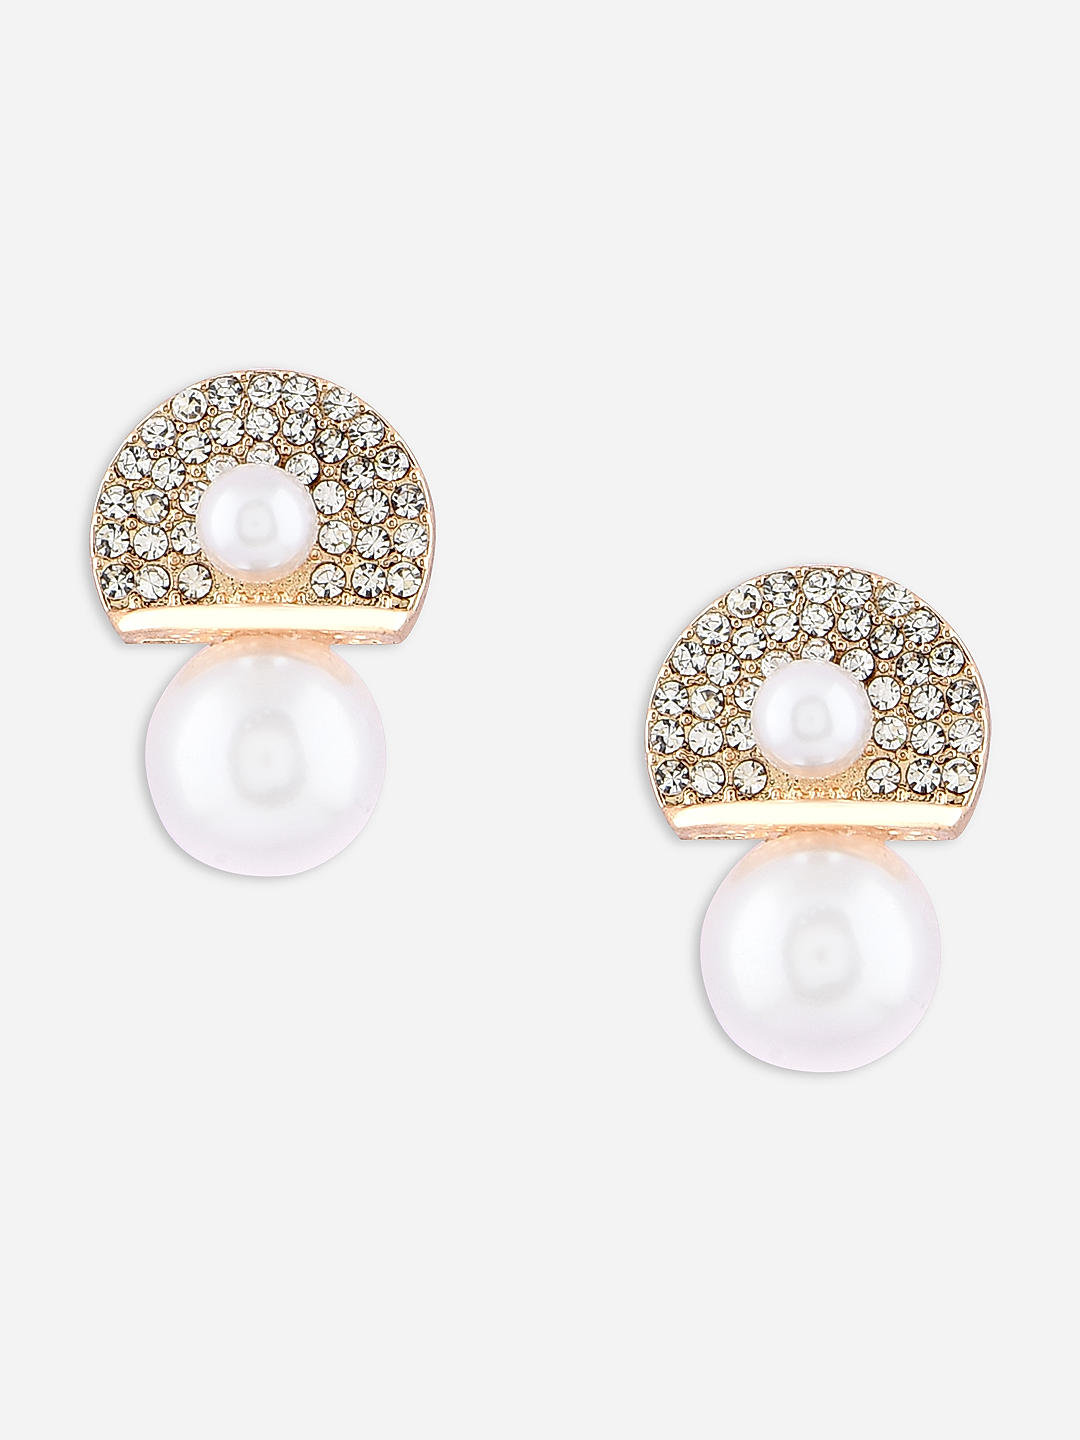 Buy 18K yellow gold pearl earrings - Stud earrings - 8mm pearl small studs  online at aStudio1980.com